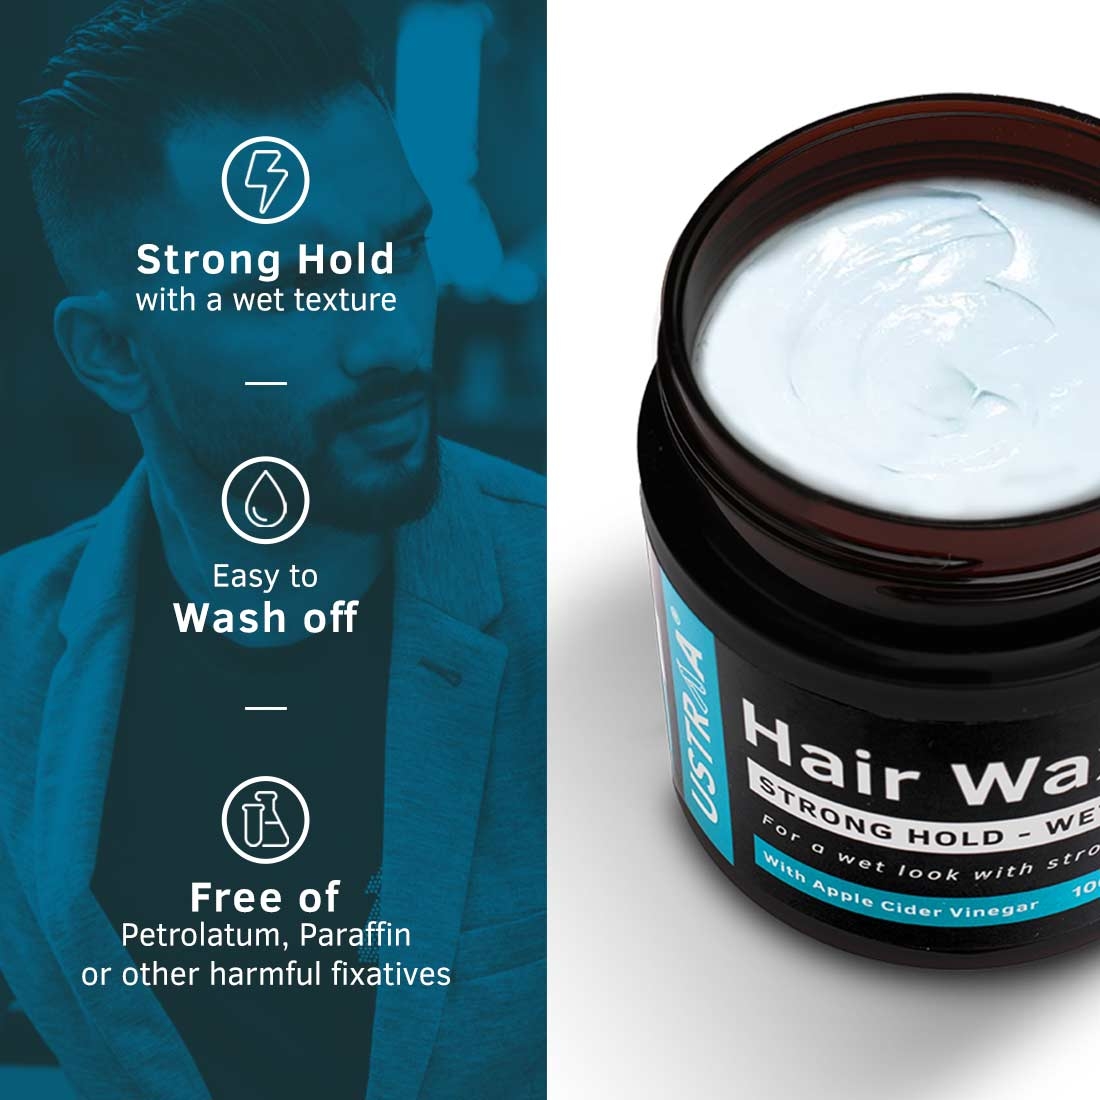 Ustraa | Hair Wax - Strong Hold - Wet Look 100g 5